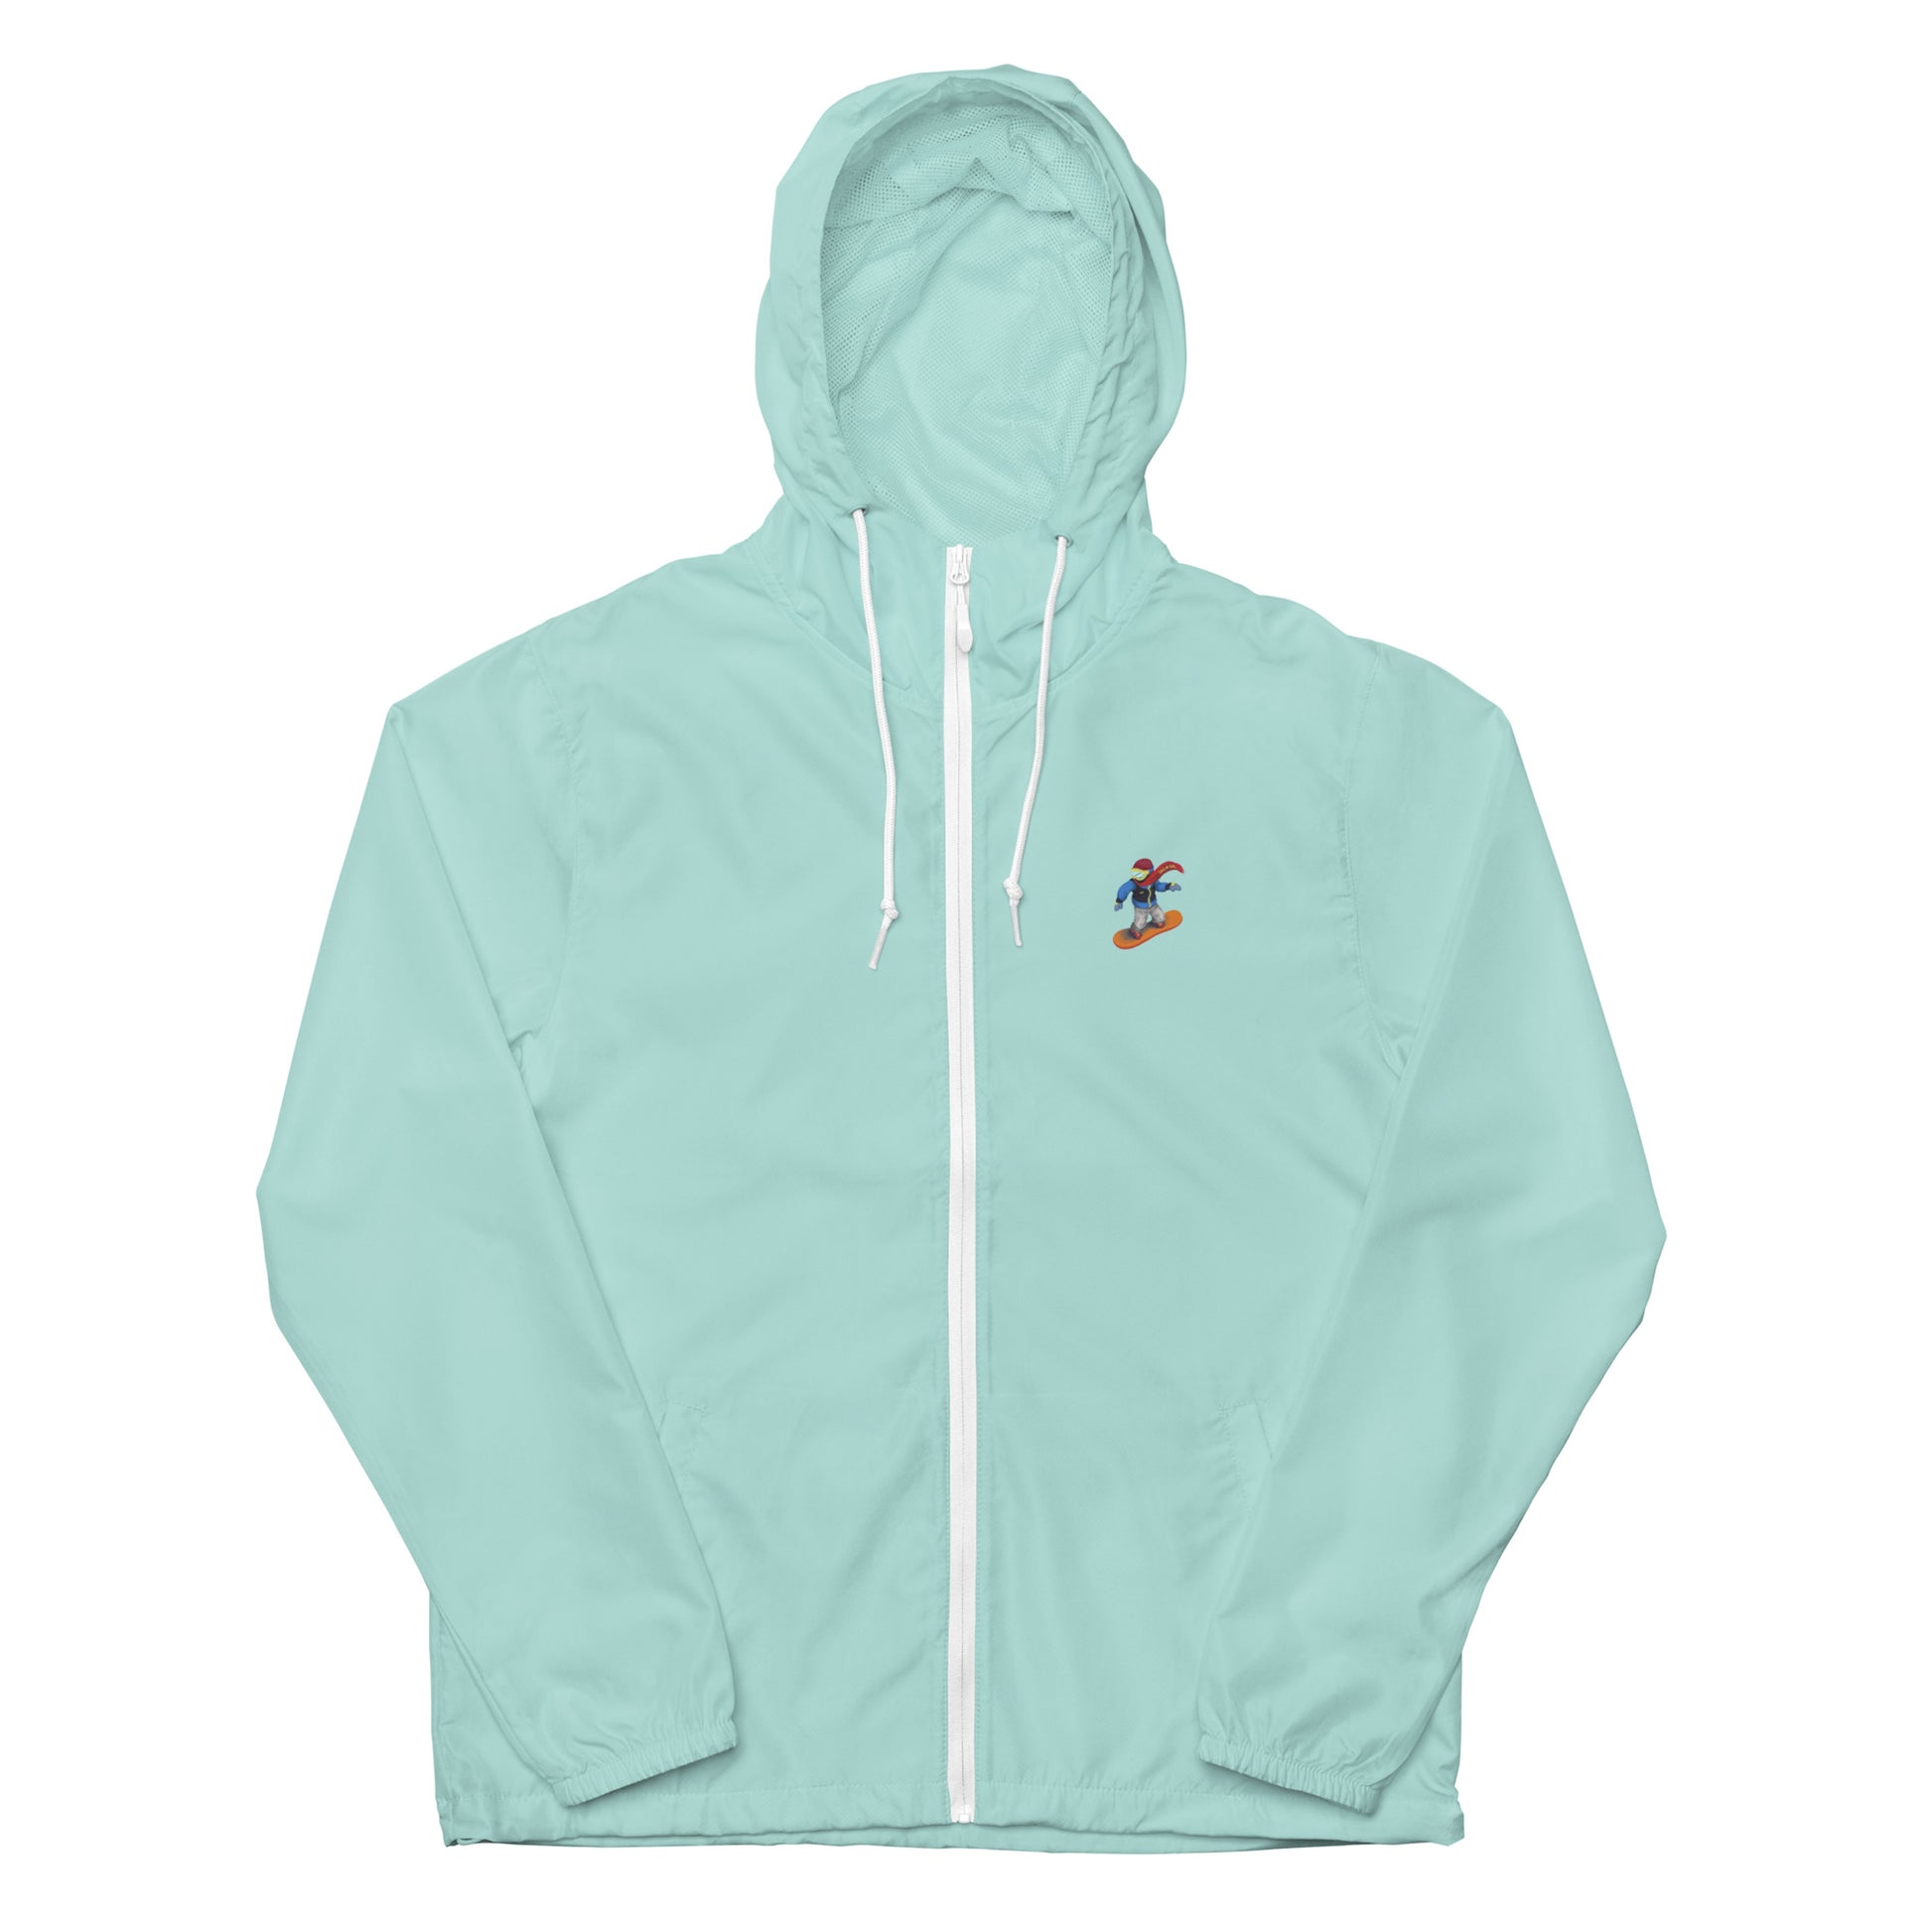 aqua snowboard emoji hoodie with zipper